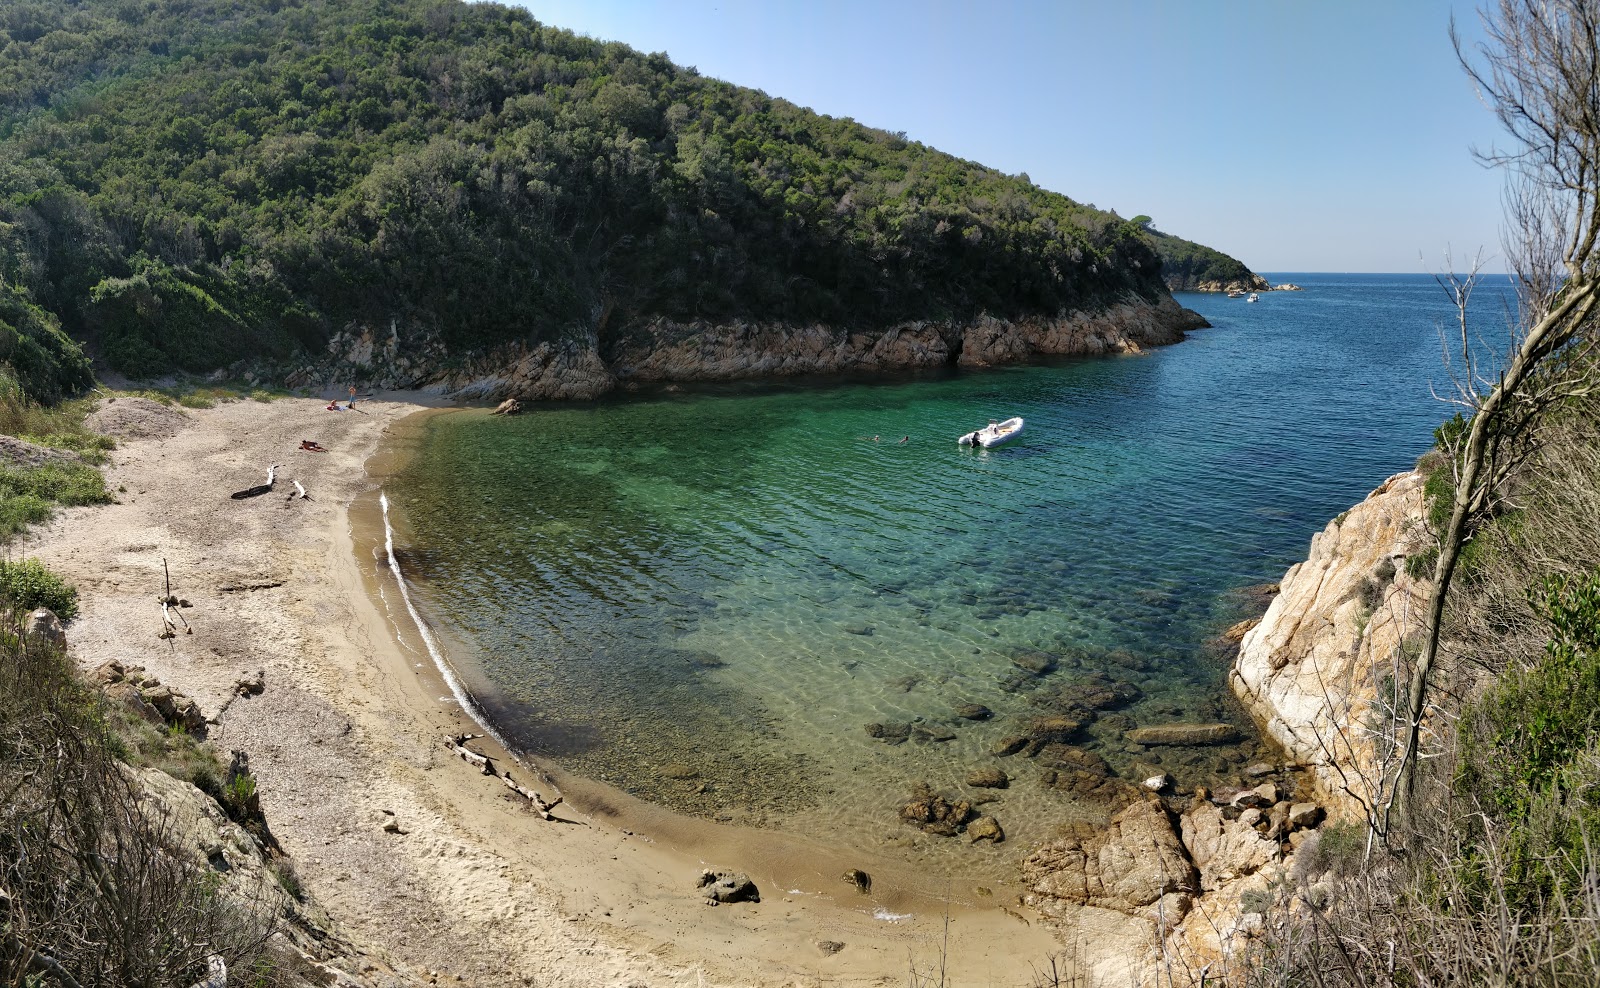 Spiaggia della Lamaia'in fotoğrafı turkuaz saf su yüzey ile